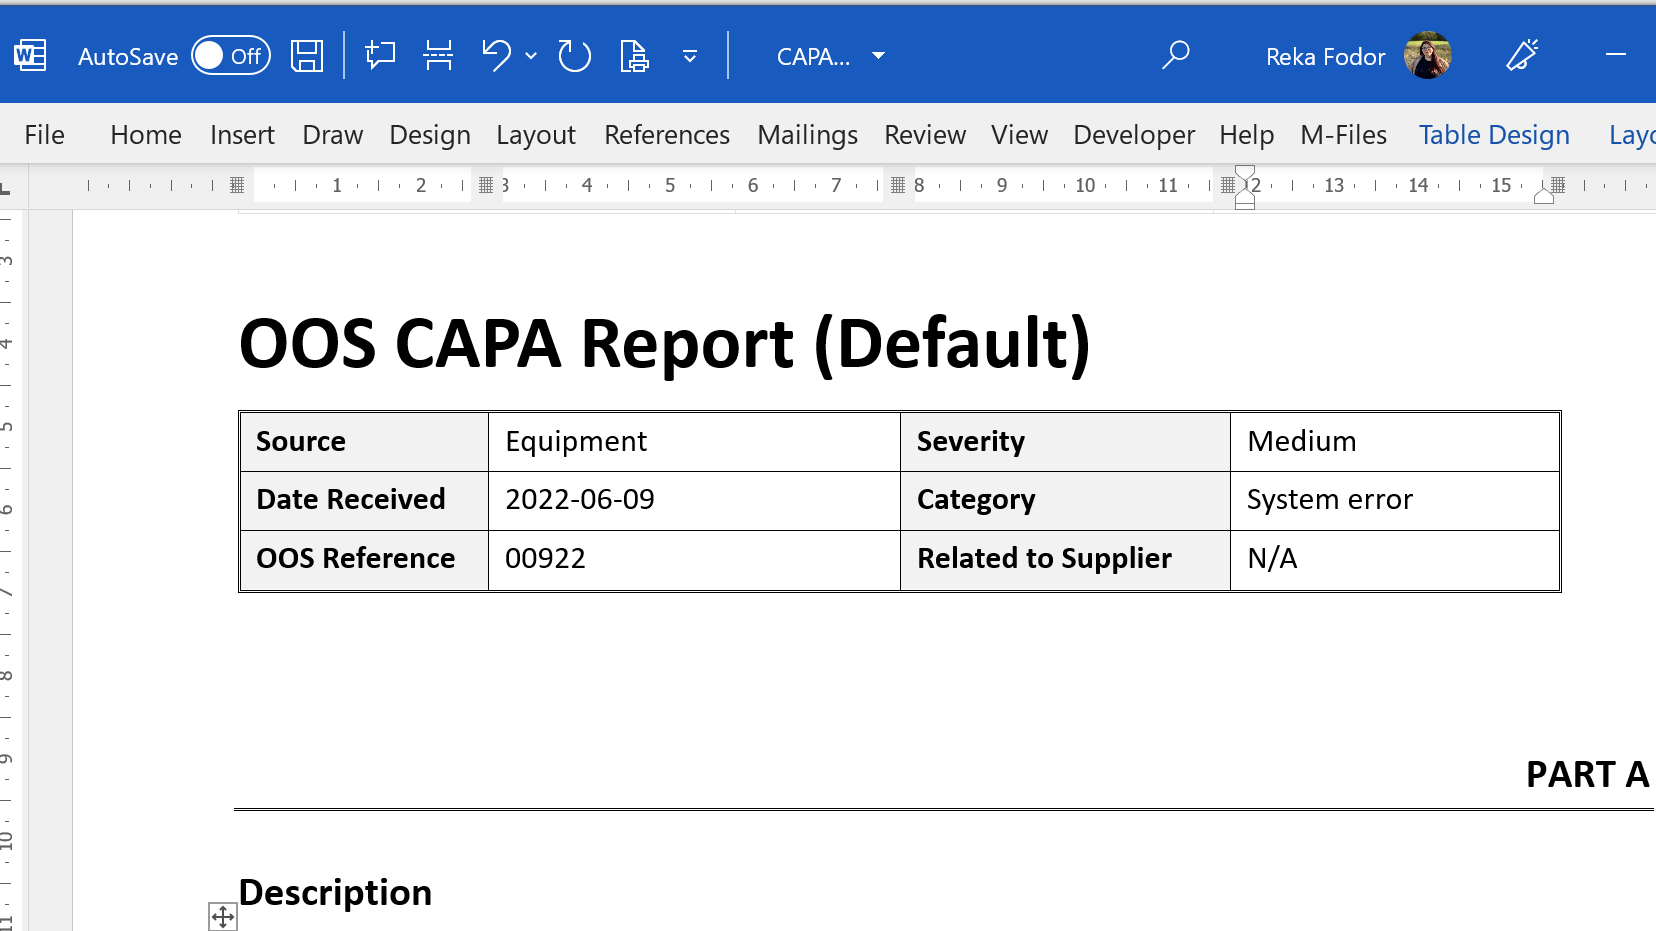 Editing OOS CAPA Report in Microsoft Word